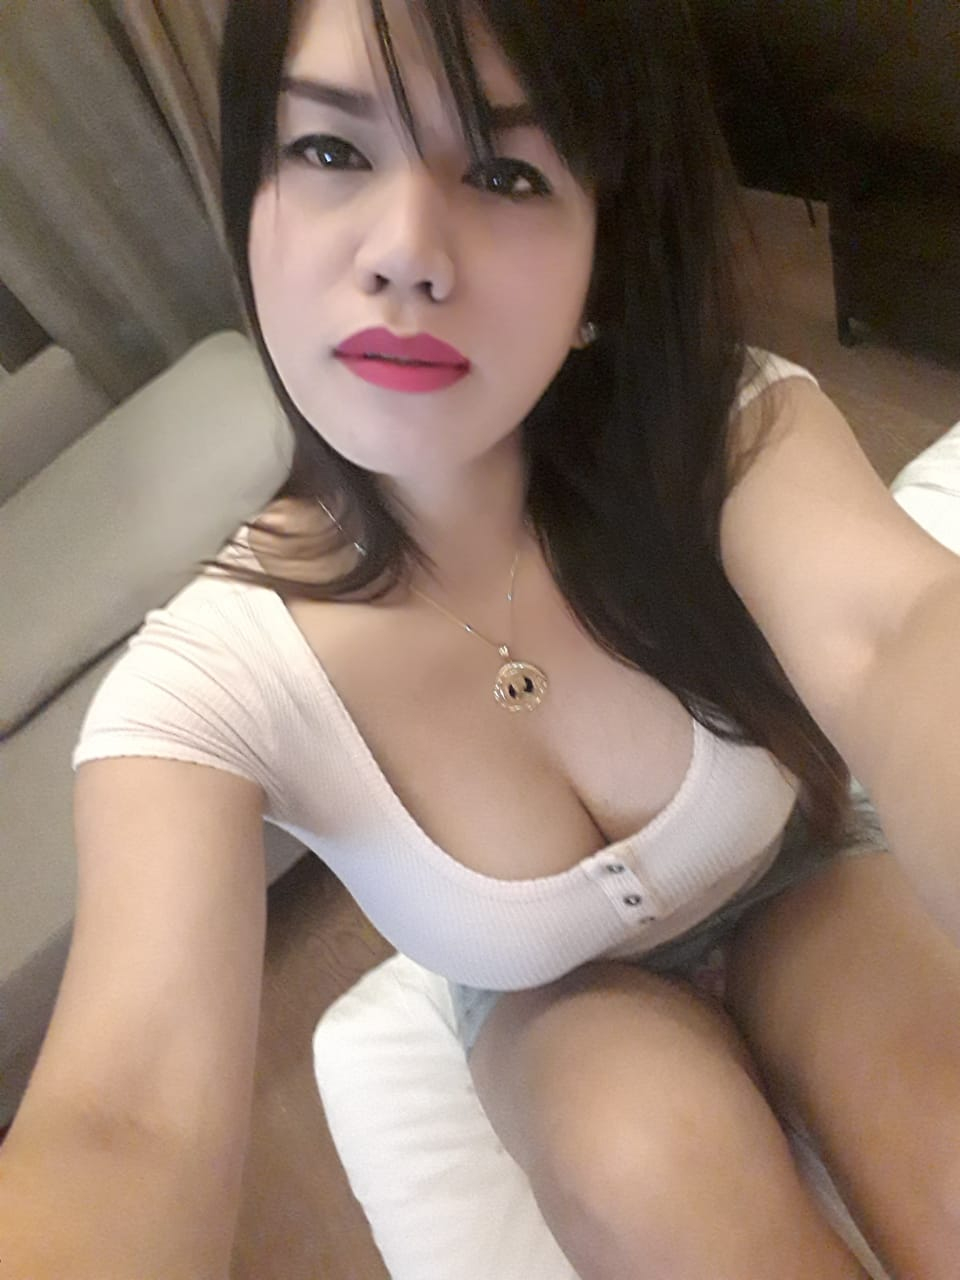 Busty Filipino Woman Transsexual - Sexy Busty Curvy Vivian TS, Filipino Transsexual escort in Manila